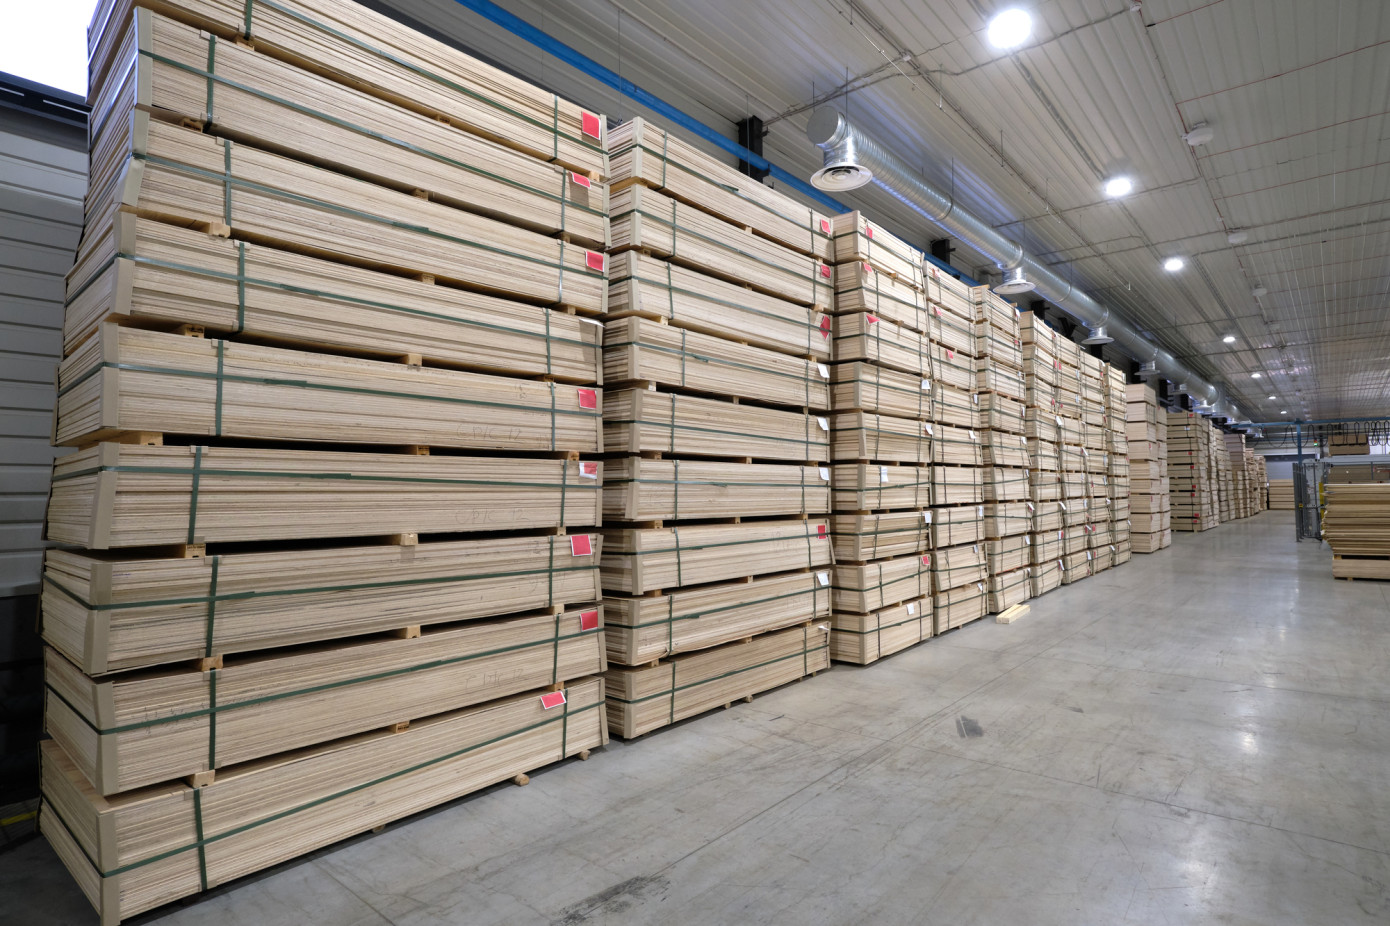 U.S. imports of hardwood plywood decreased